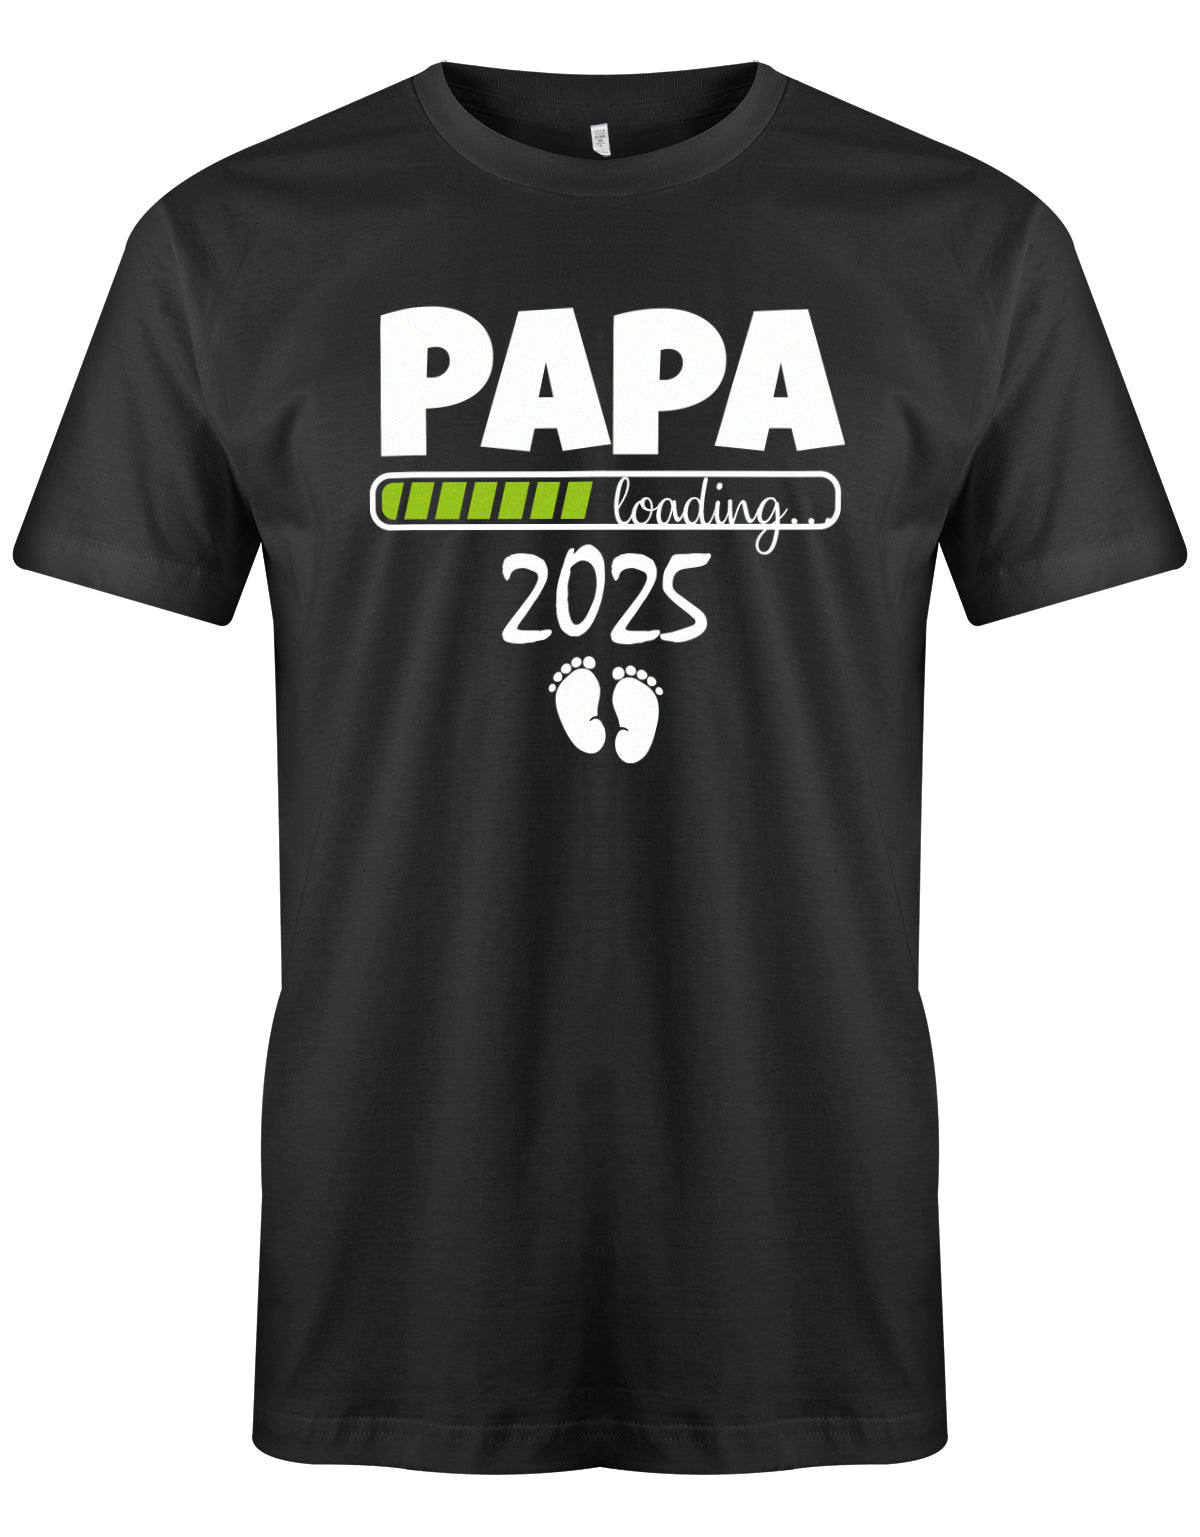 Papa Loading 2025 - Werdender Papa Shirt Herren Schwarz